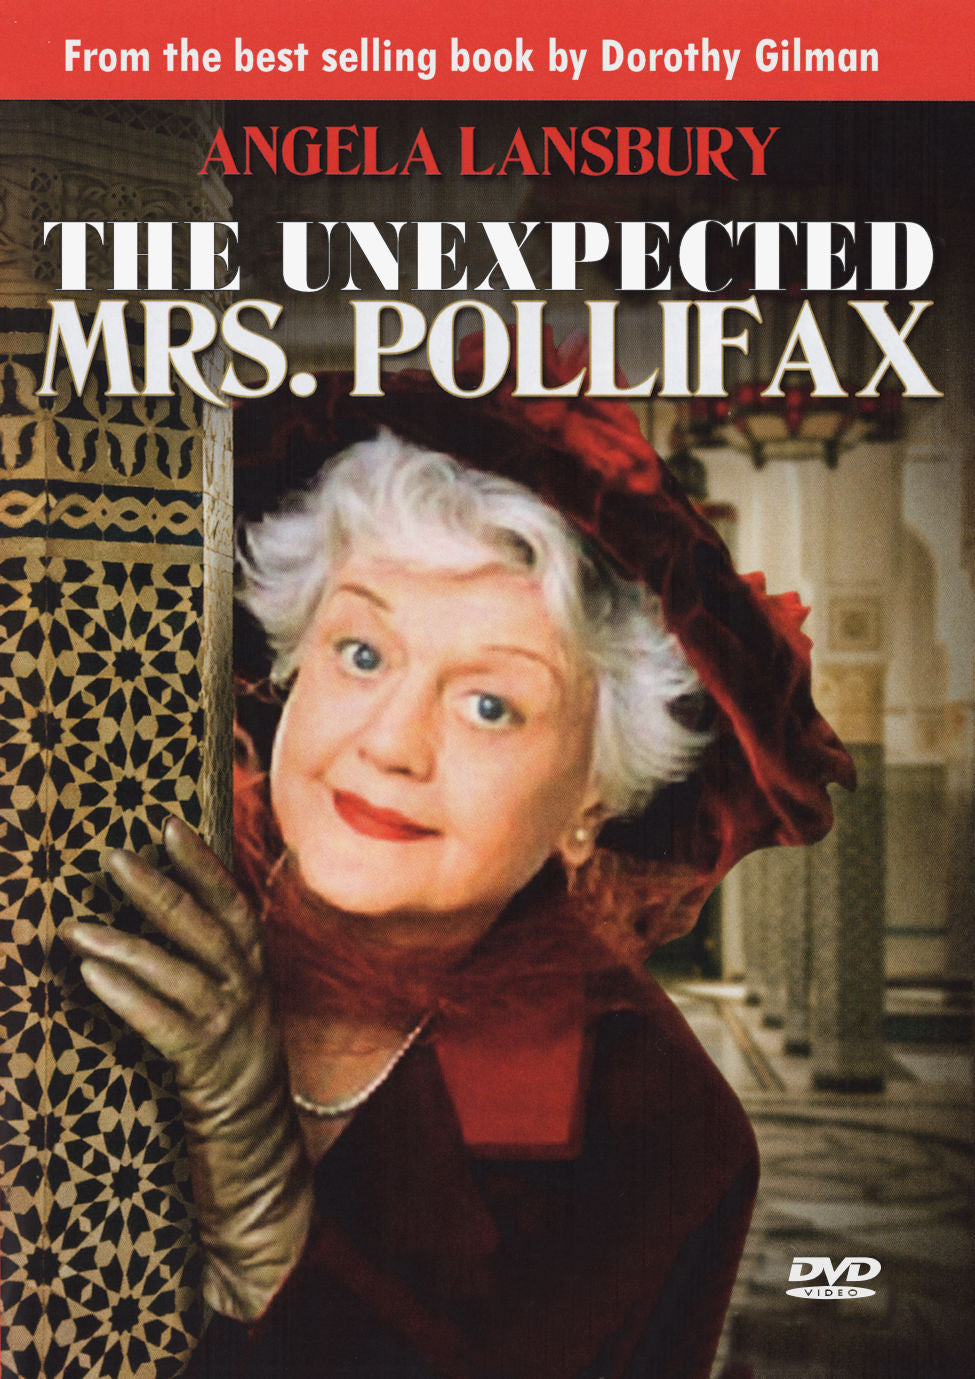 The Unexpected Mrs. Pollifax 1999 DVD Angela Lansbury Dorothy Gilman restored print 